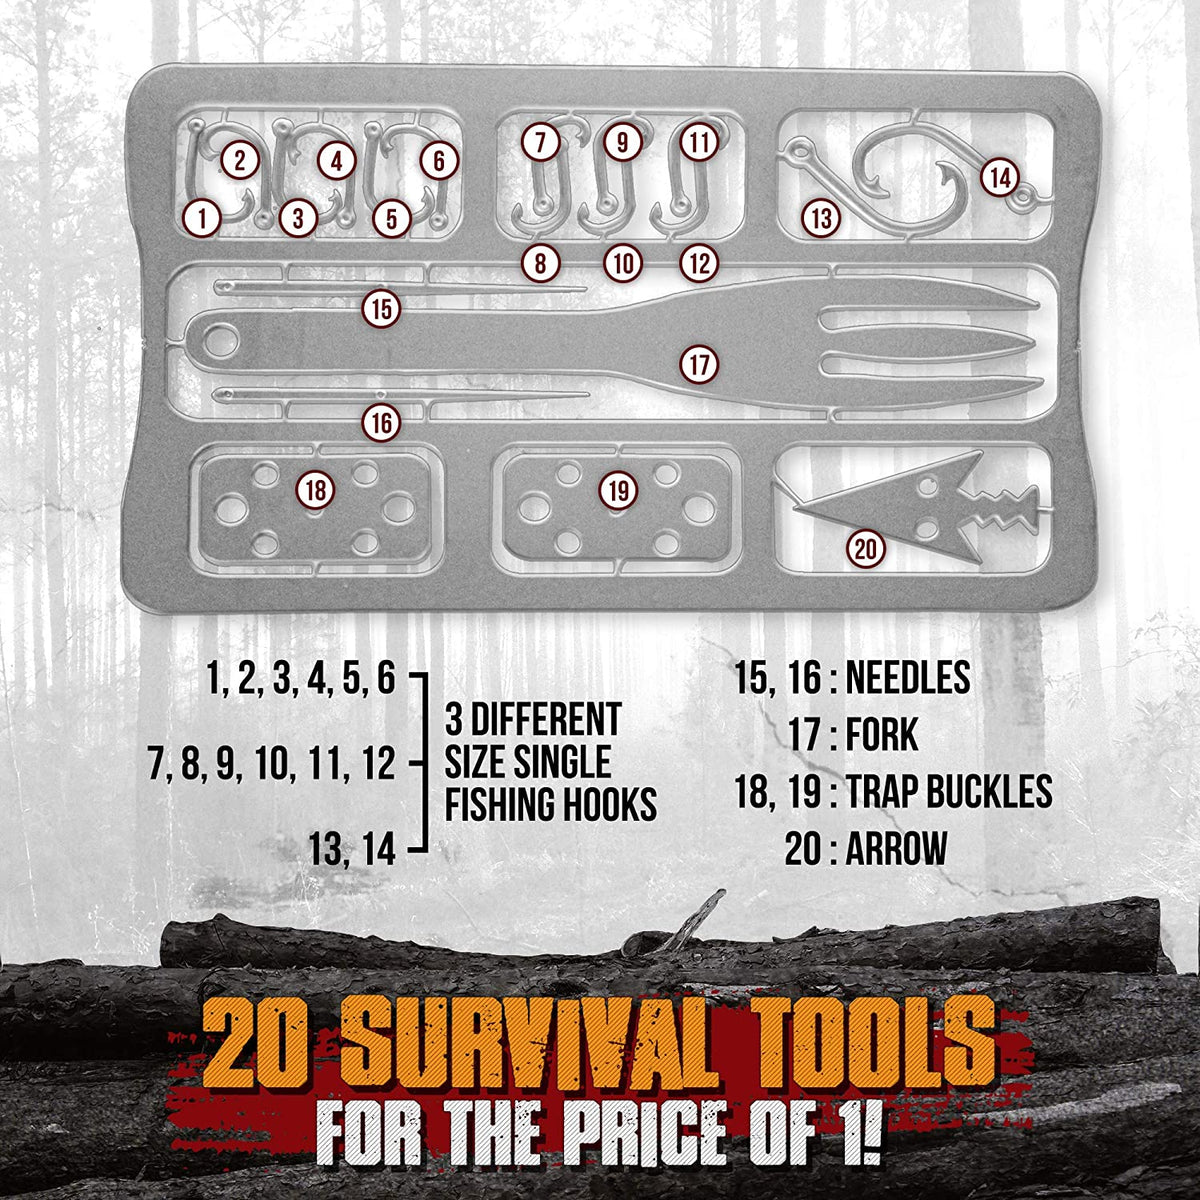 Survival Card Bushcraft Gear Great Men's Gift